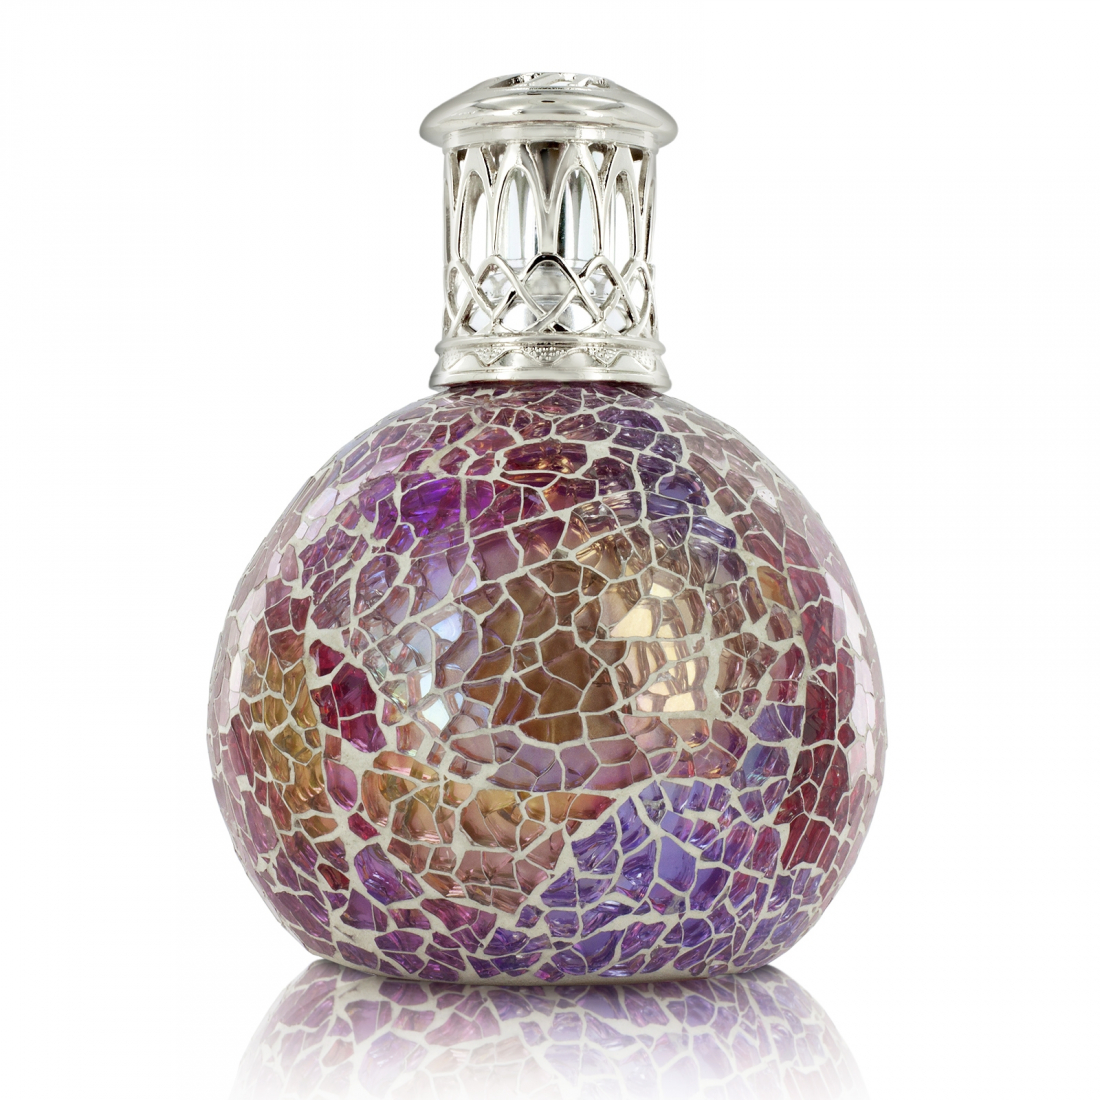 'Pearlescense Medium' Fragrance Lamp